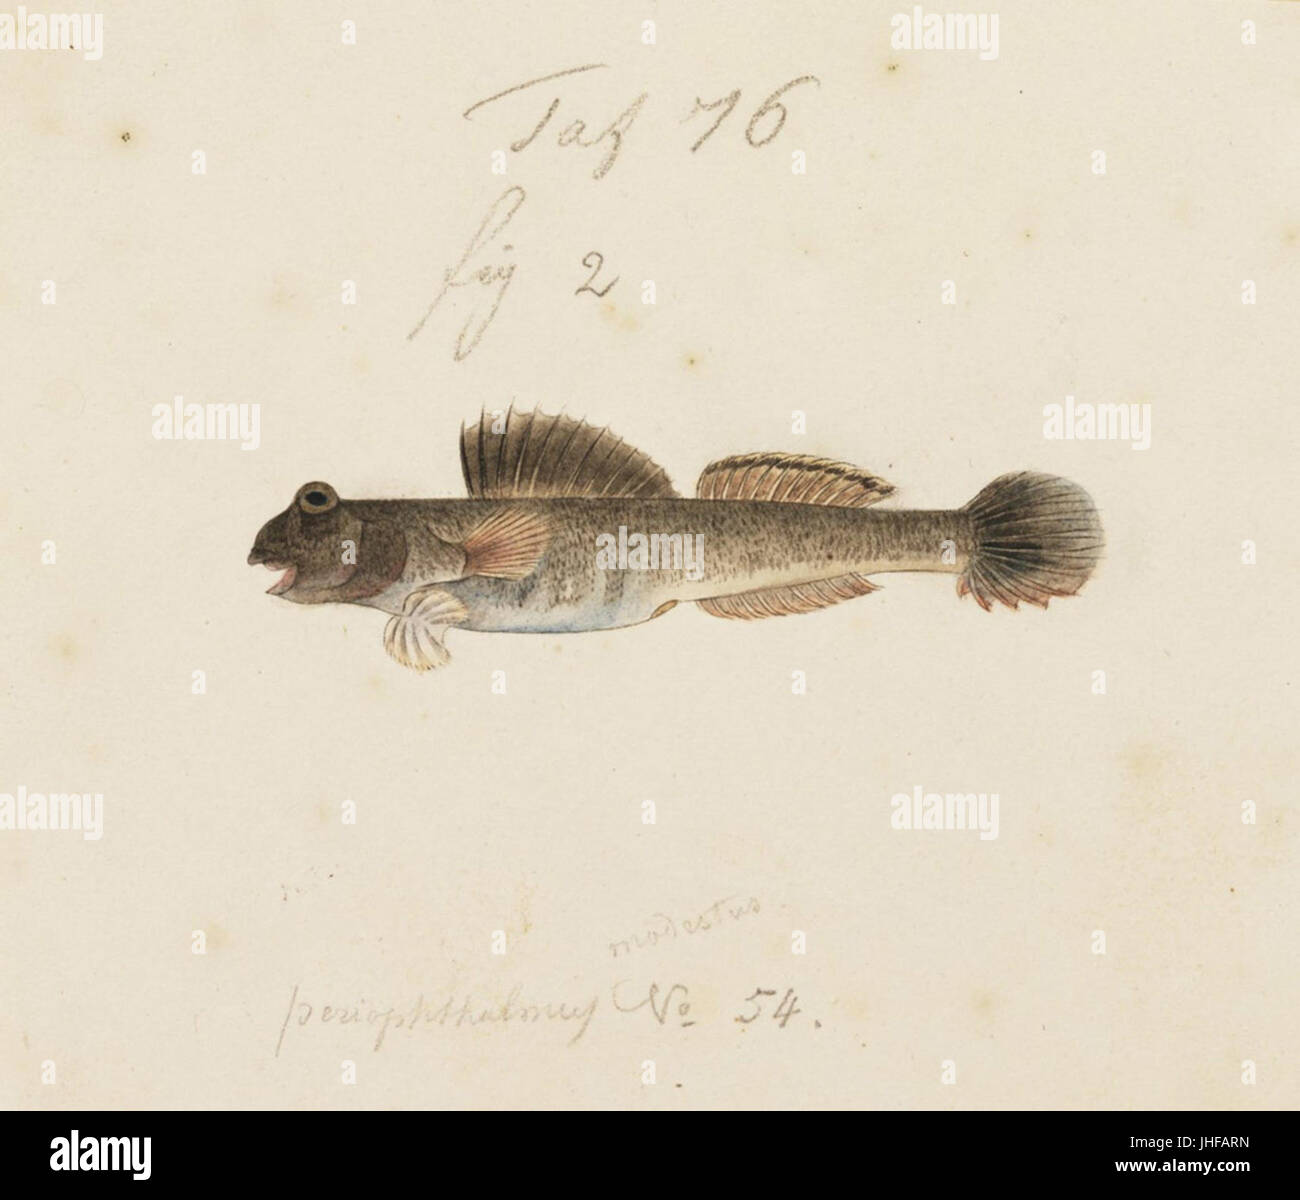 Naturalis Biodiversity Center - RMNH.ART.232 - Periophthalmus cantonensis (Osbeck) - Kawahara Keiga - 1823 - 1829 - Siebold Collection - pencil drawing - water colour Stock Photo